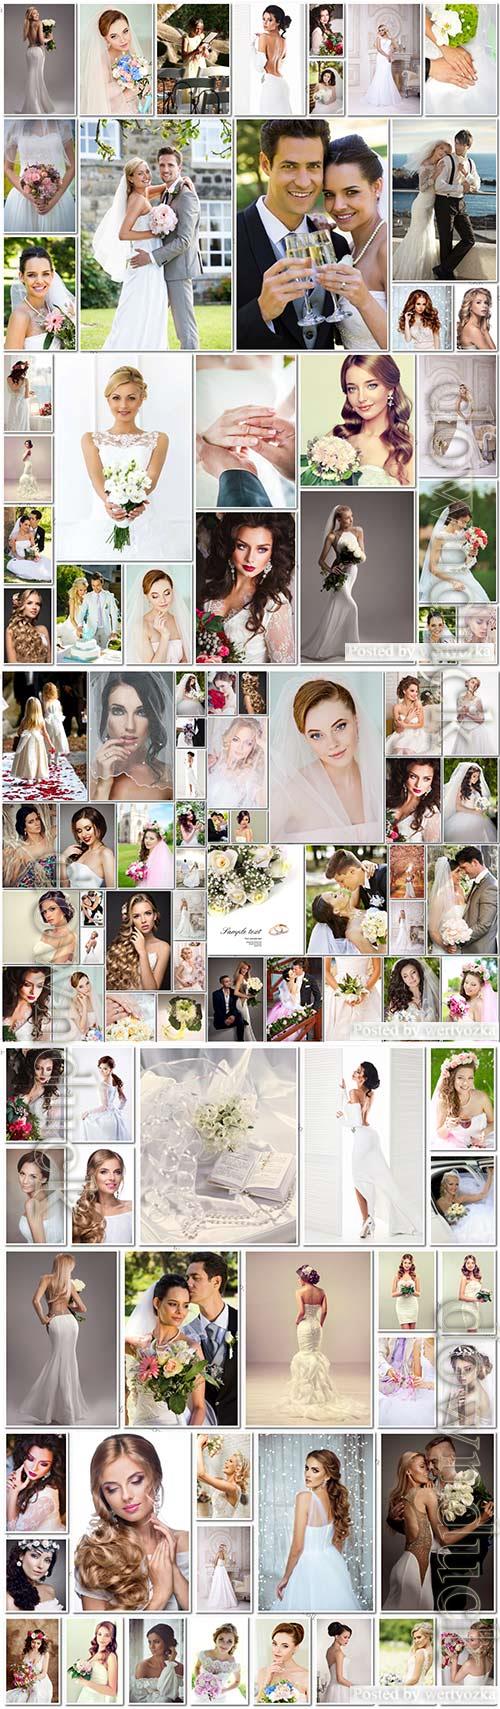 100 Bundle beautiful bride and groom, wedding stock photo vol 2